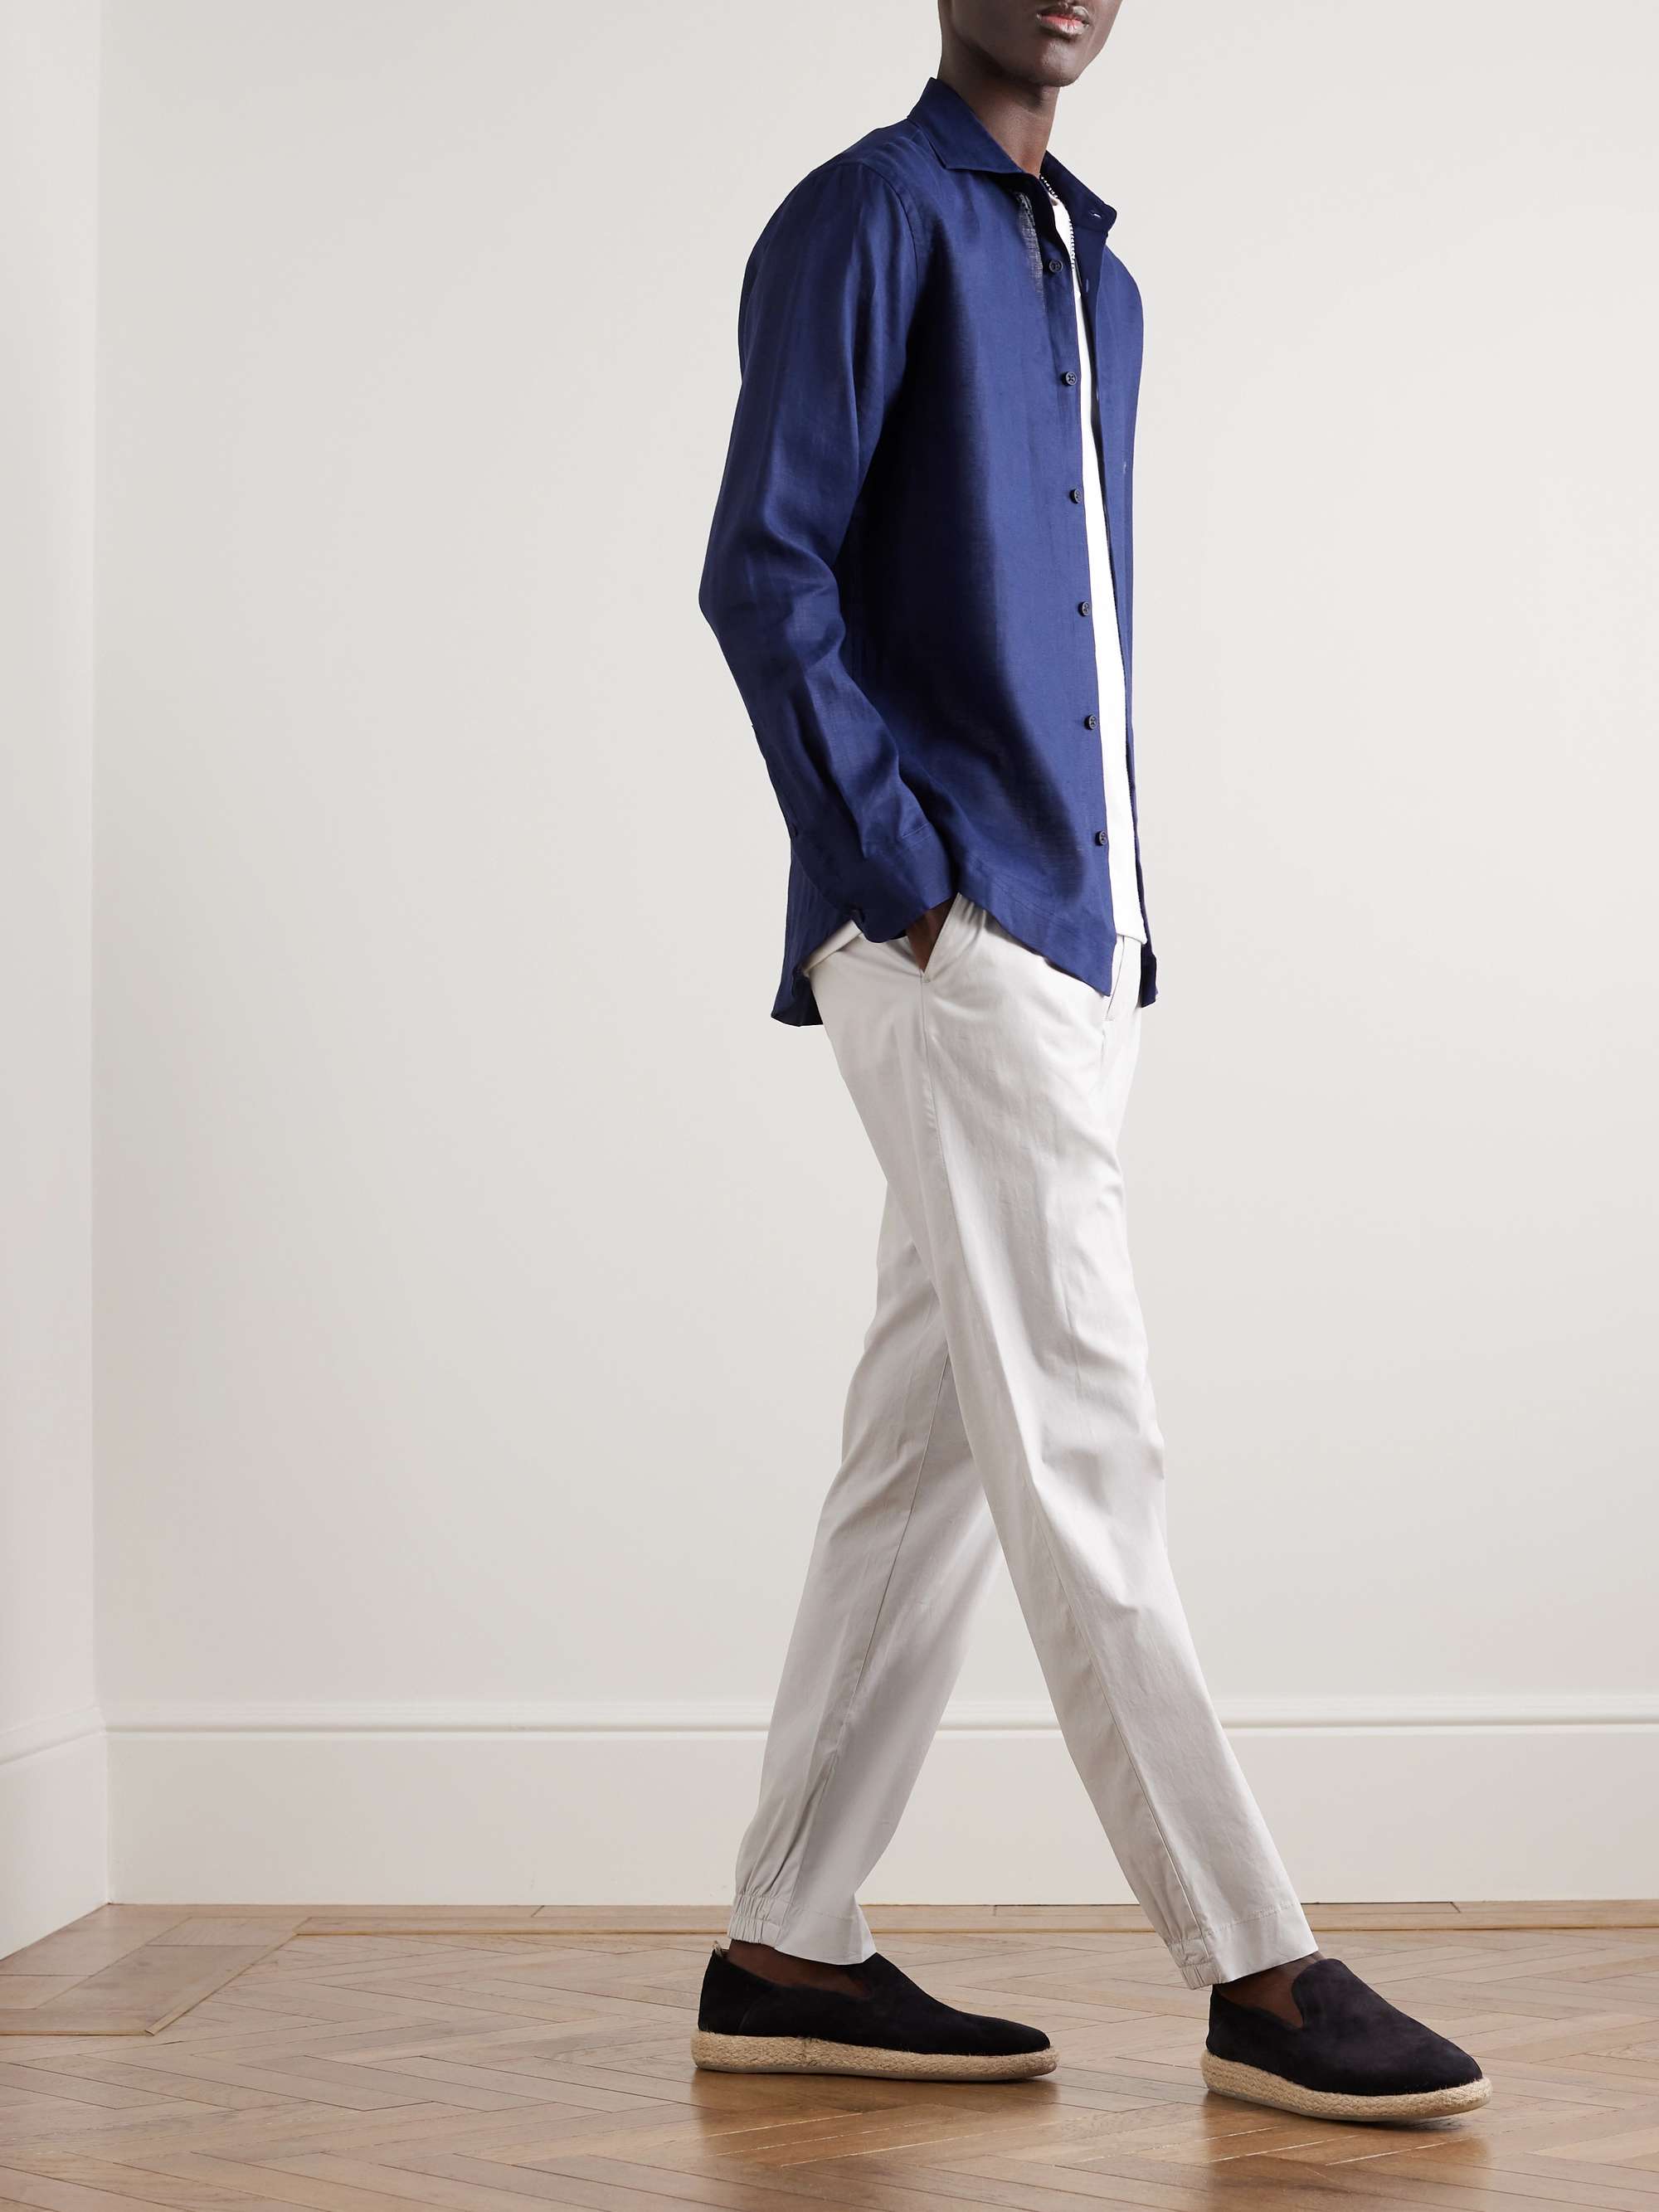 ORLEBAR BROWN Giles Slim-Fit Linen Shirt